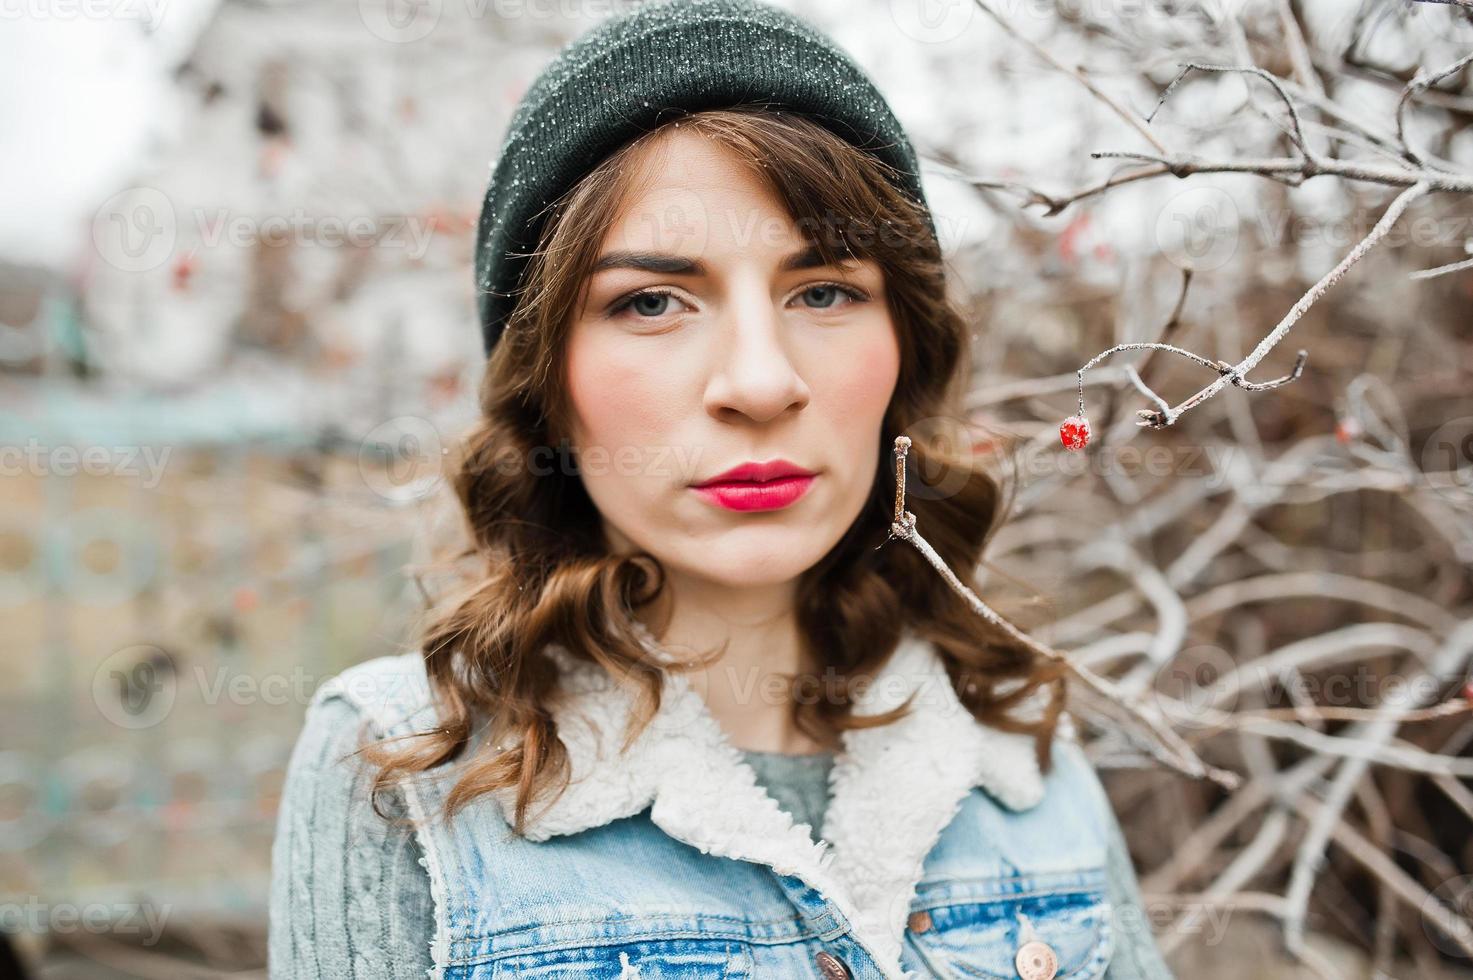 retrato de menina morena de chapéu e jaqueta jeans em arbustos congelados. foto